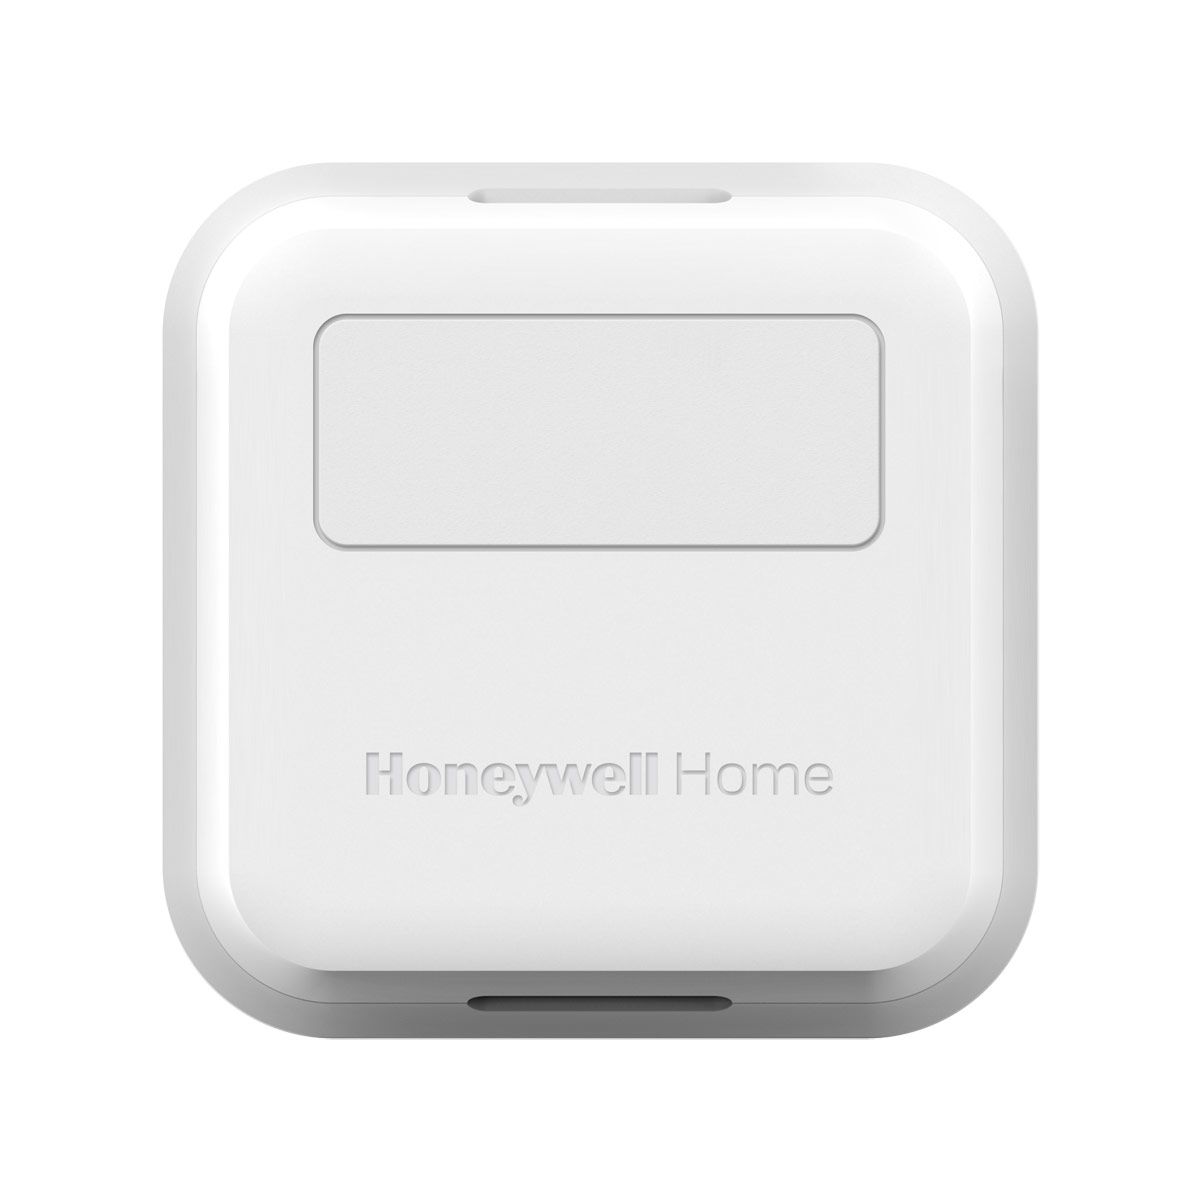 Honeywell Home Smart Room Sensor, For T9/T10 Honeywell Home Thermostats - RCHTSENSOR-1PK/E